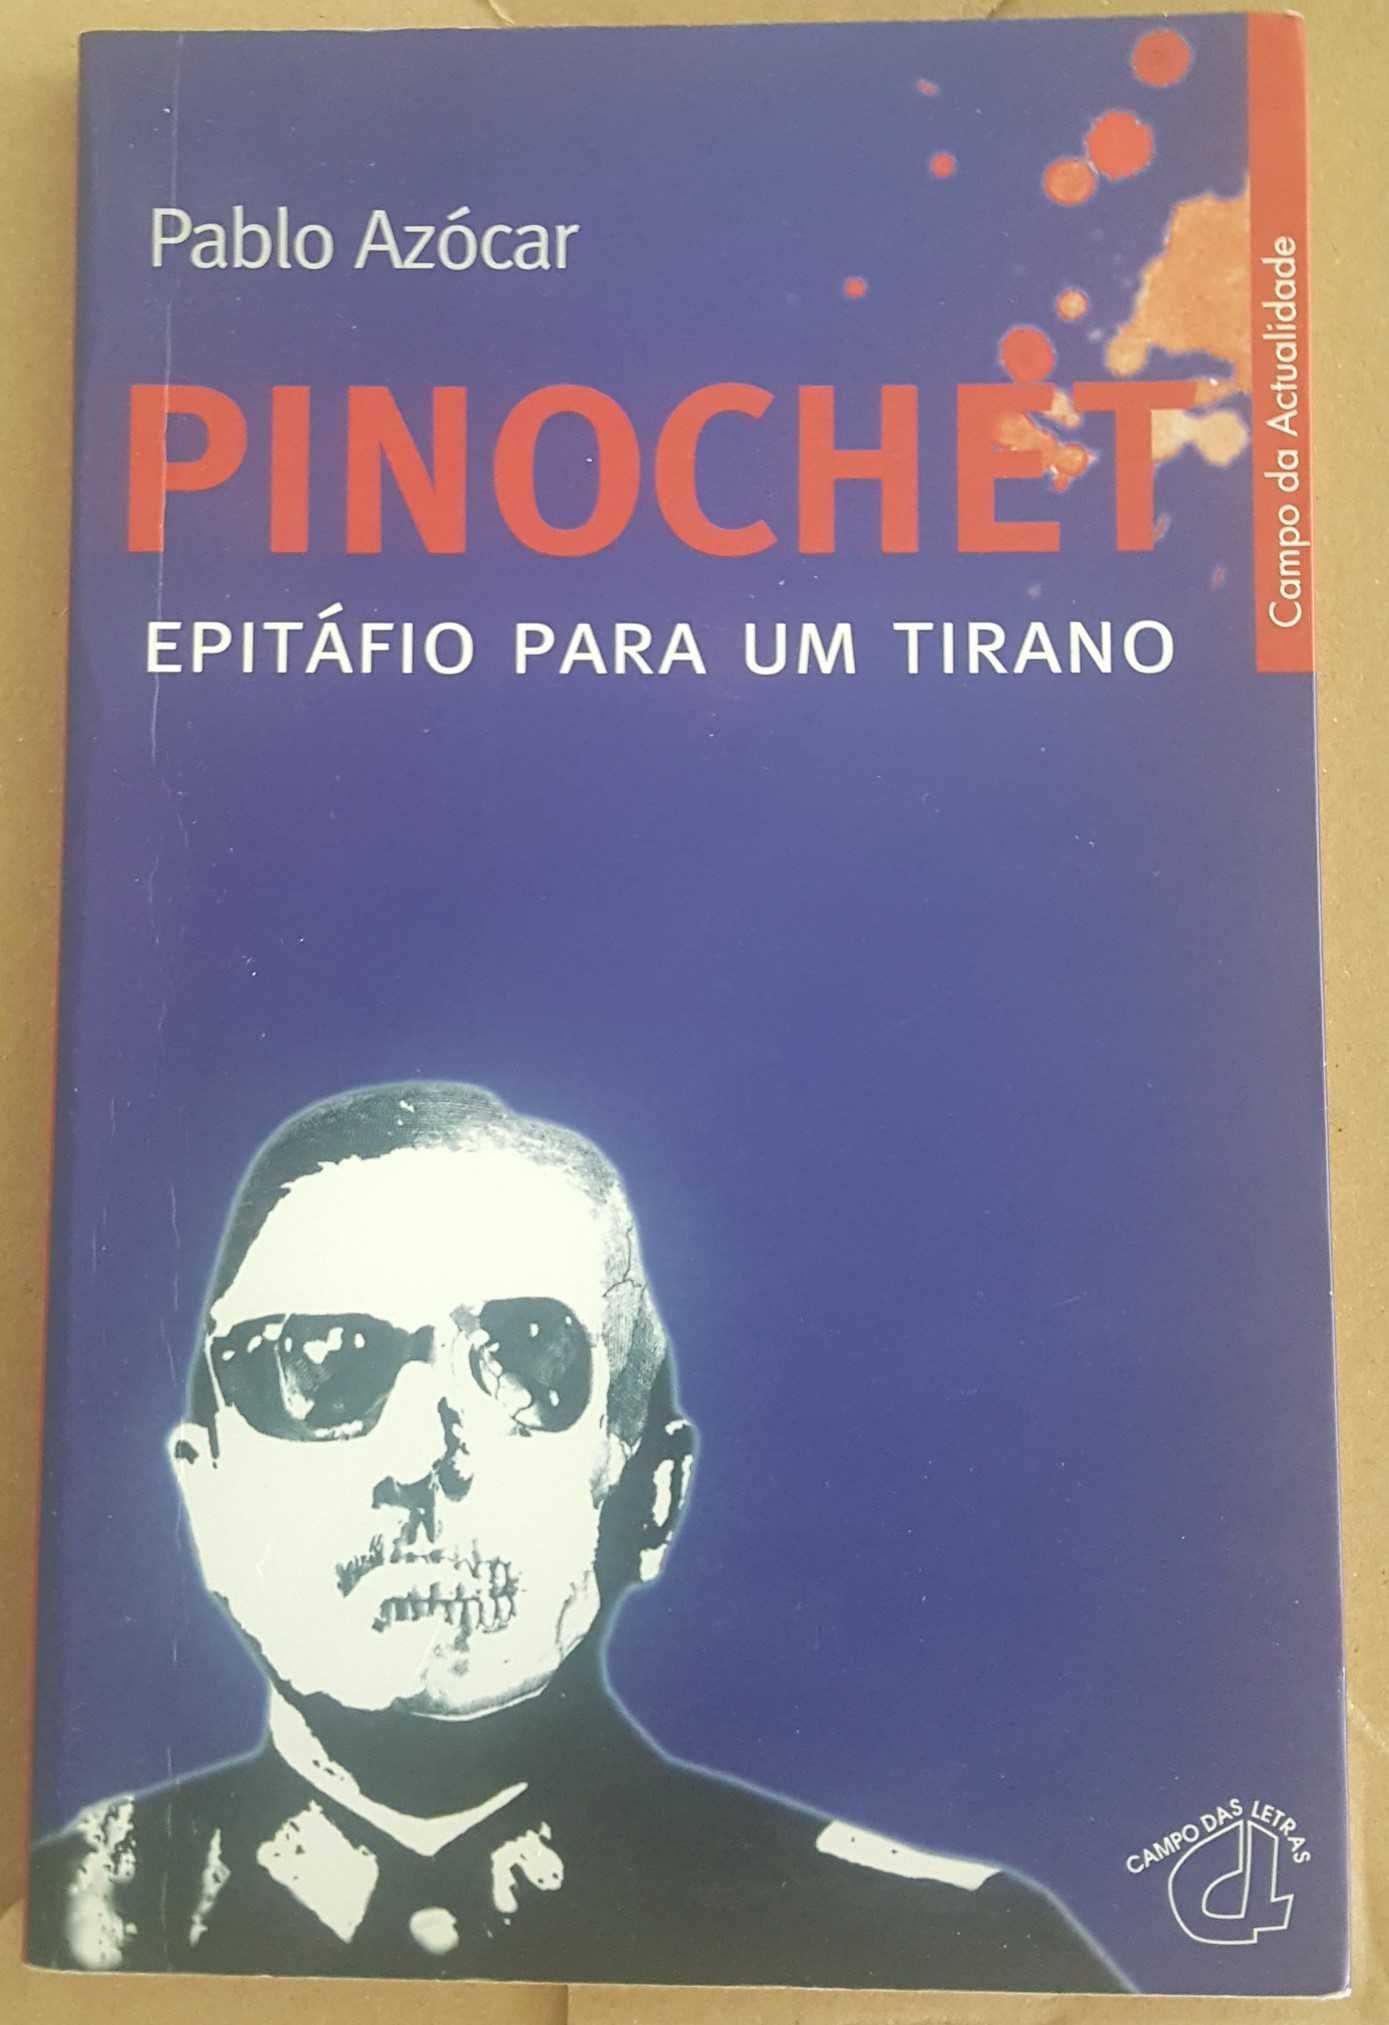 Pablo Azócar- Pinochet - Epitáfio Para Um Tirano [Campo de Letras]